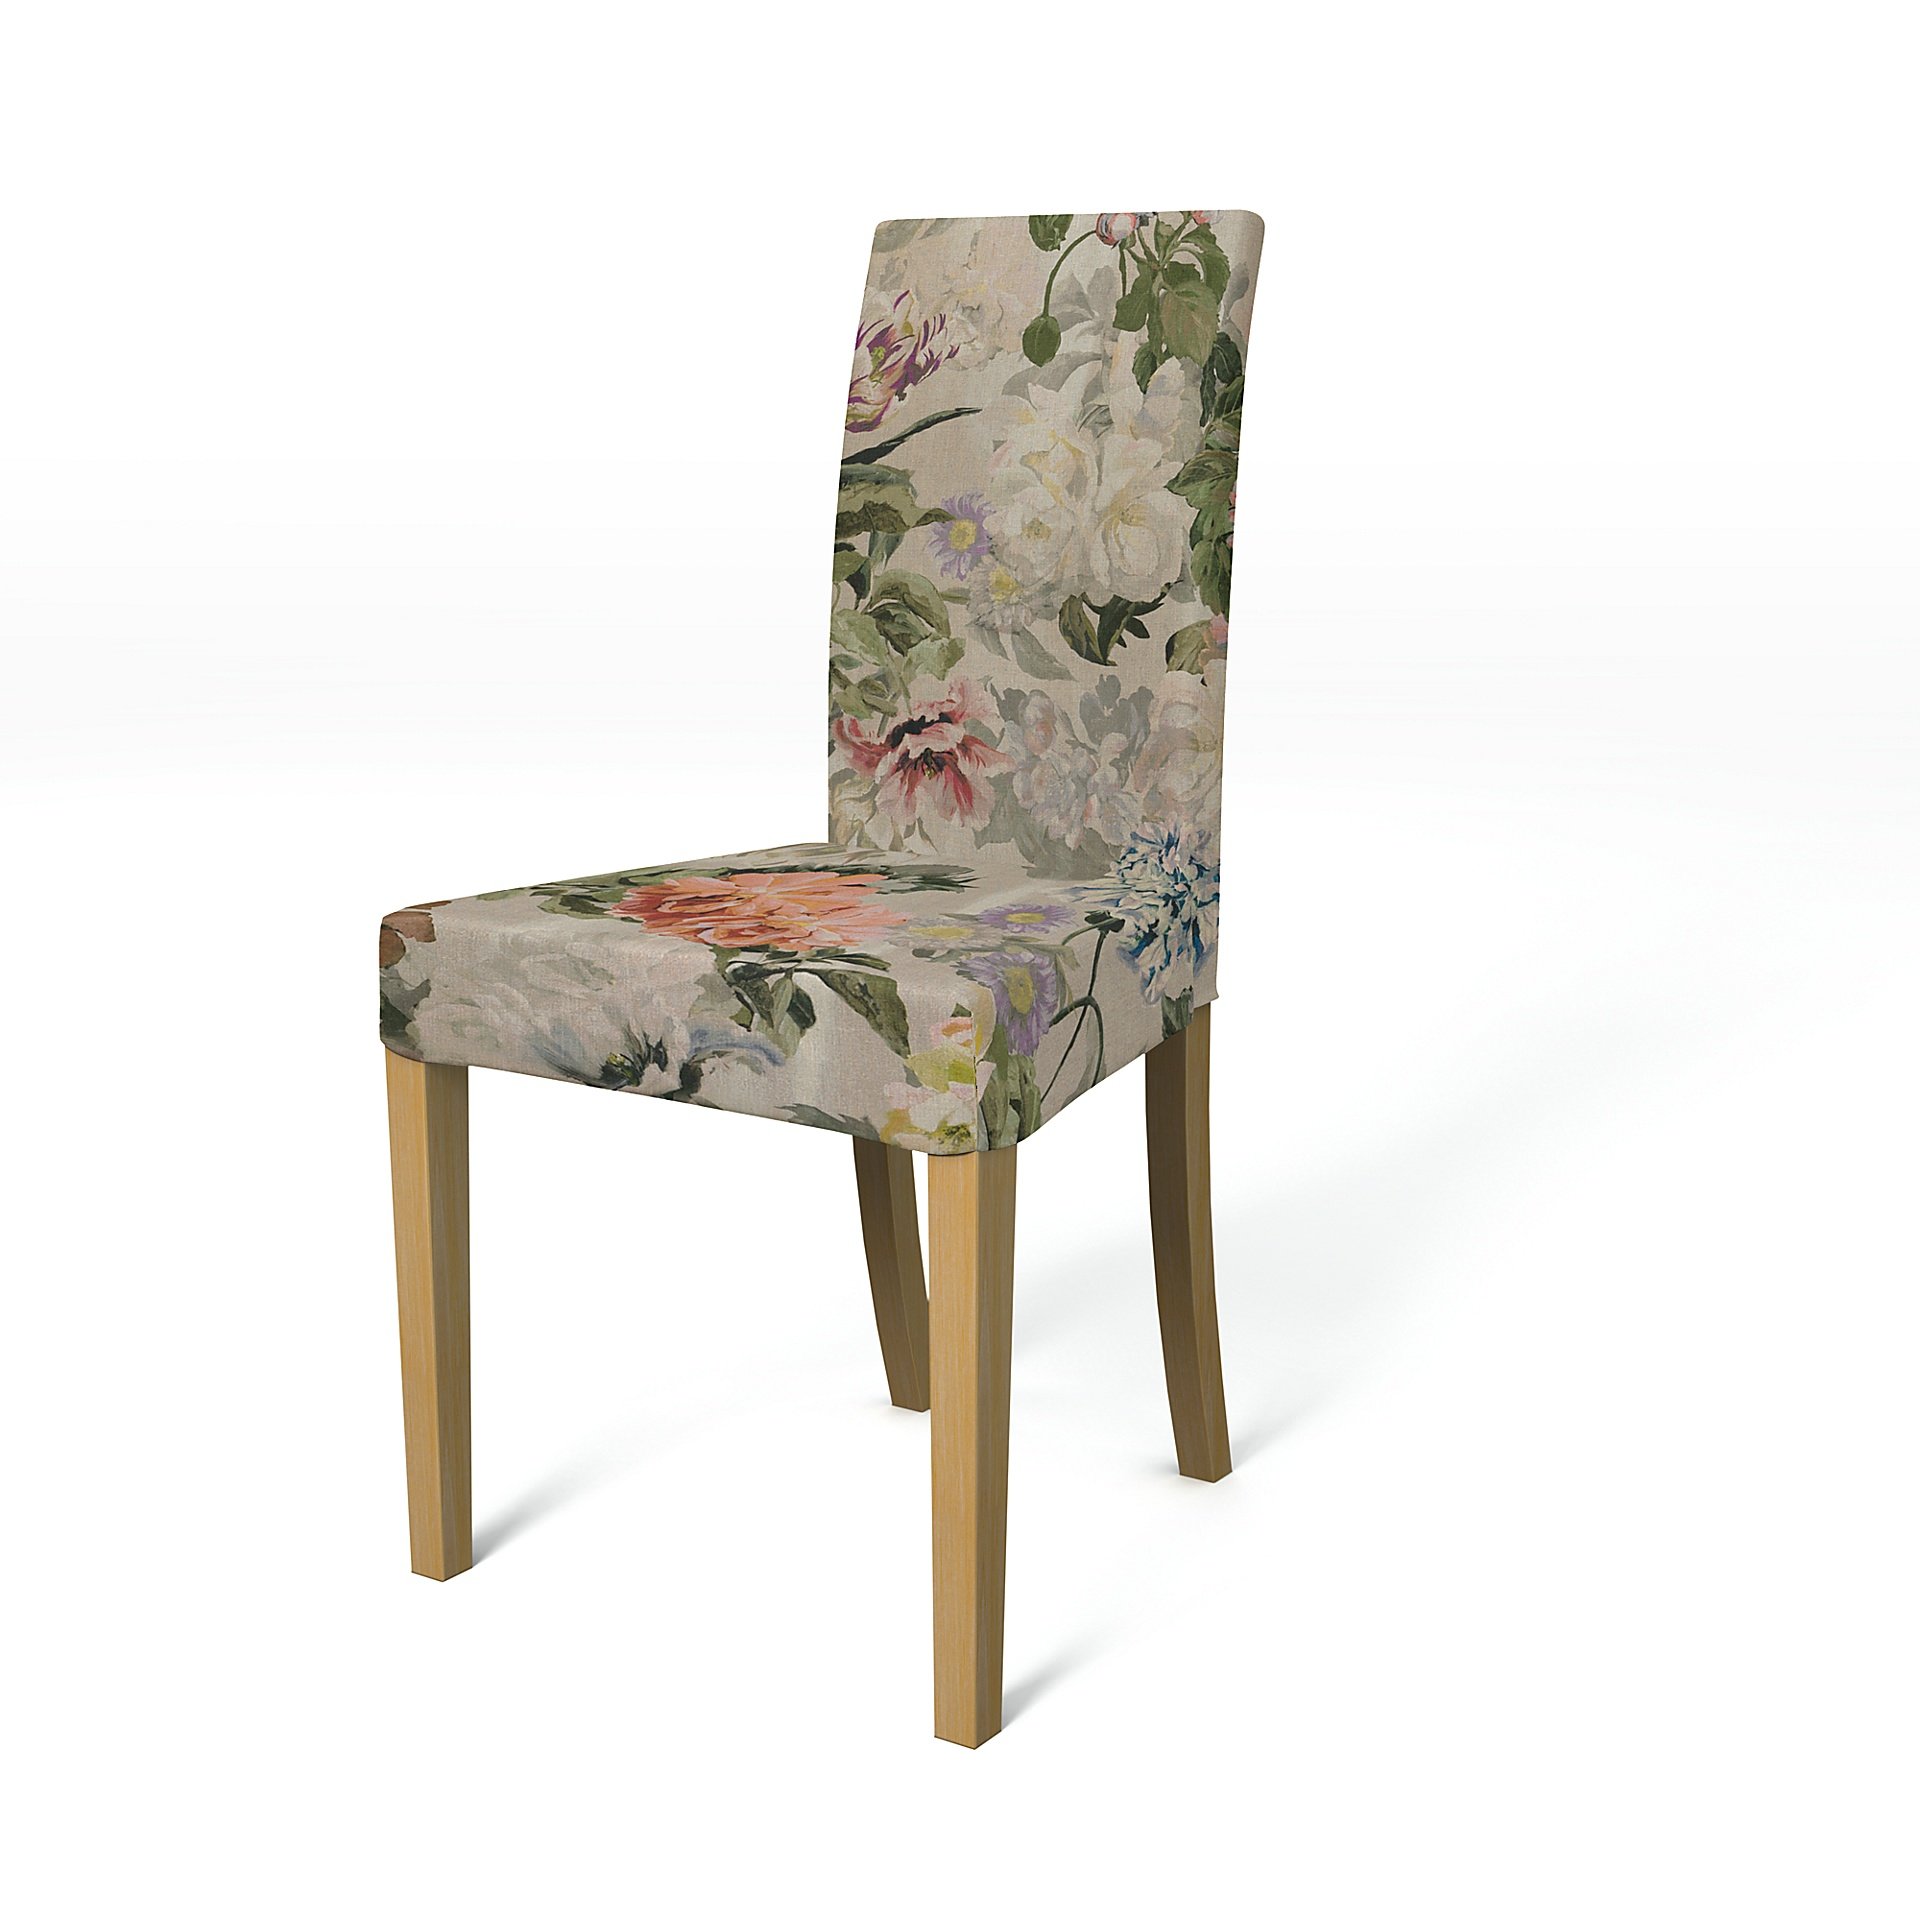 IKEA - Harry Dining Chair Cover, Delft Flower - Tuberose, Linen - Bemz